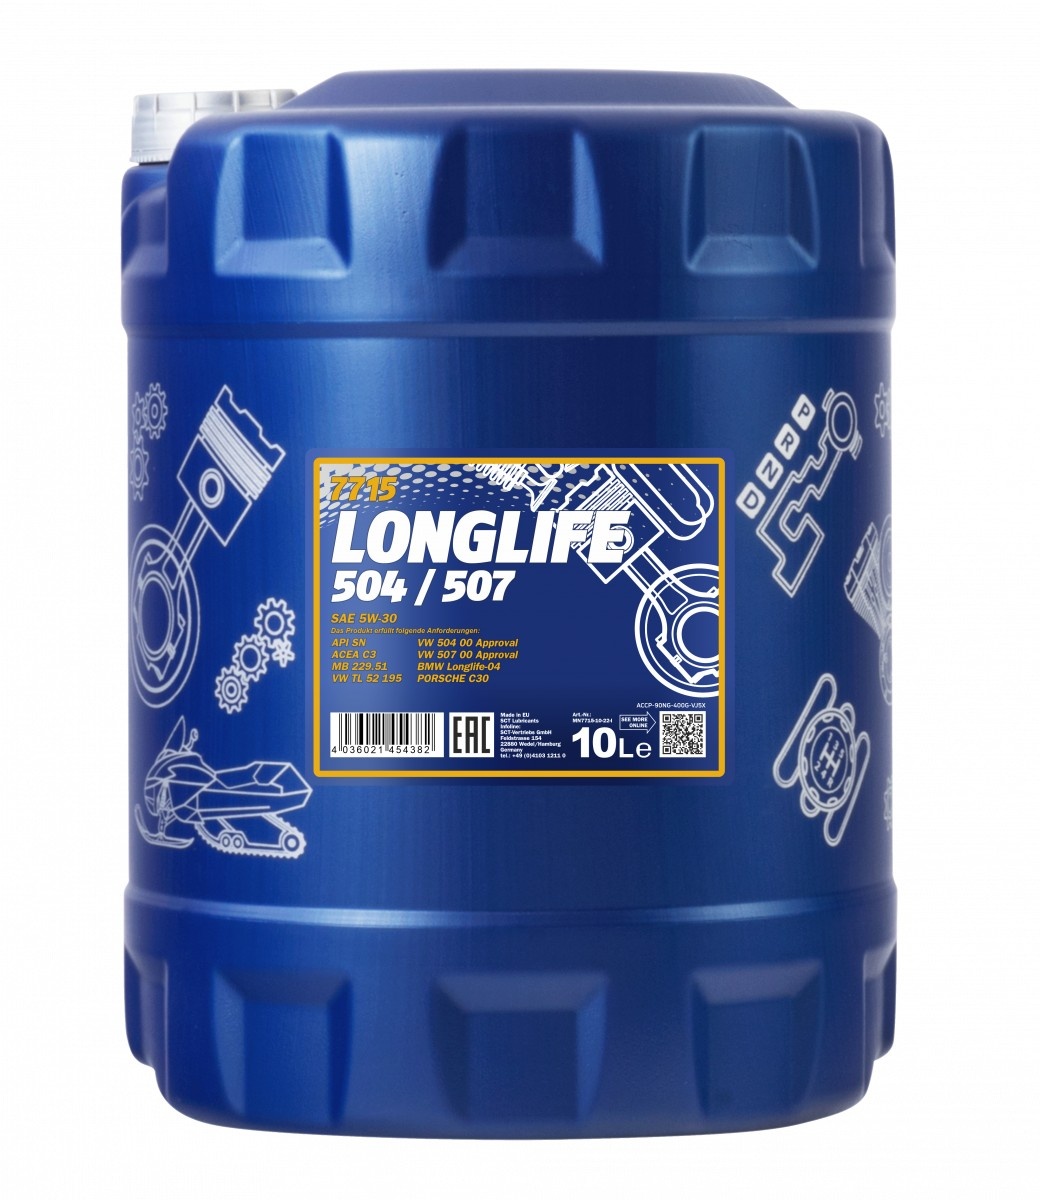 Моторное масло Mannol Longlife 504/507 5W-30 7715 10L